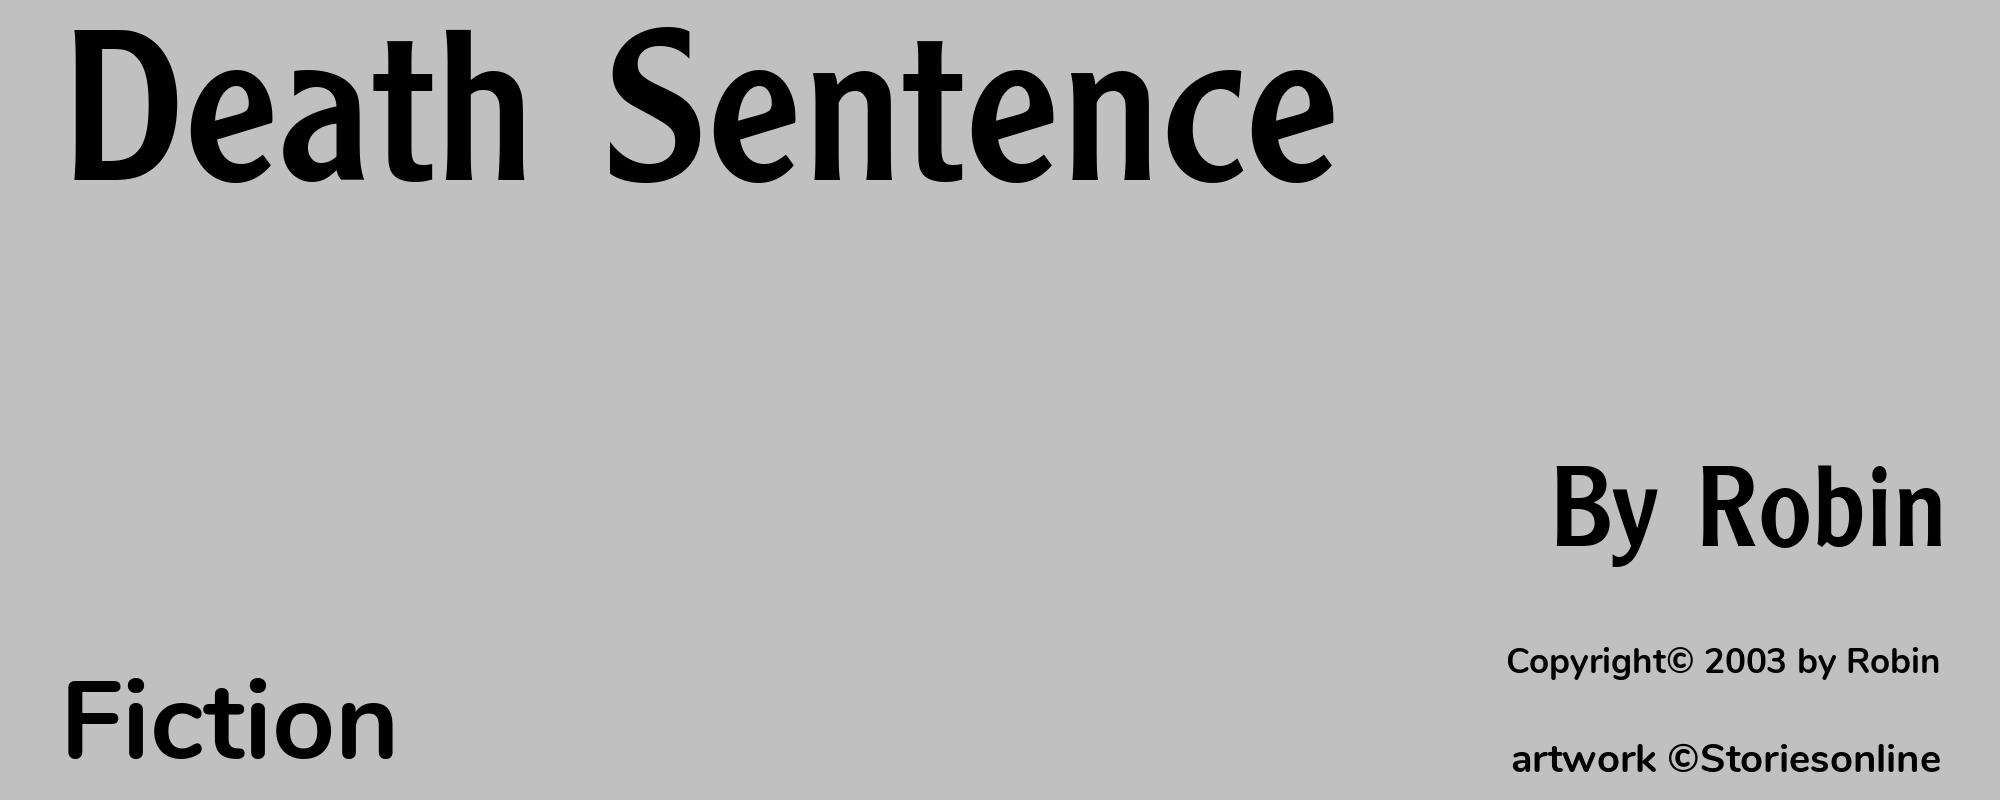 Death Sentence - Cover